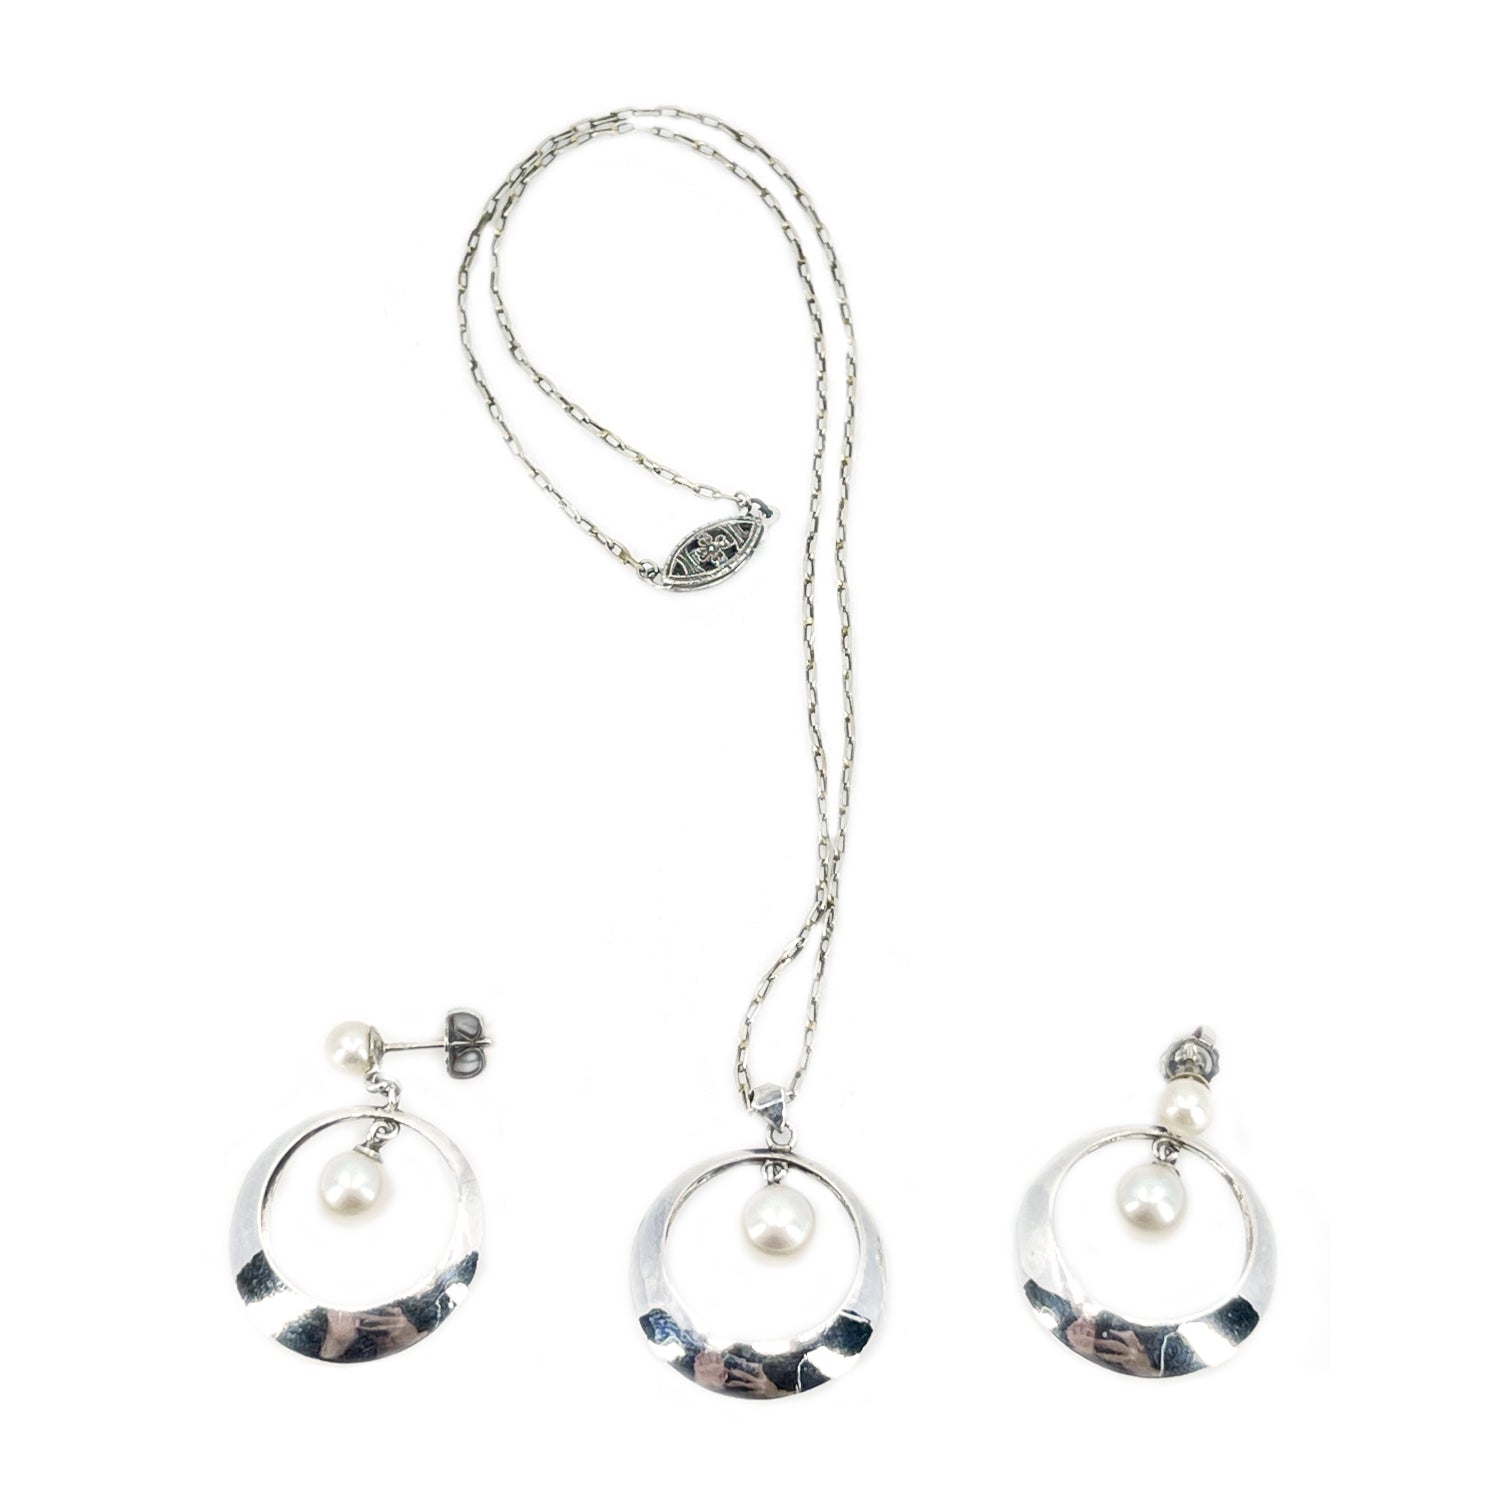 Sakata Designer Akoya Saltwater Cultured Pearl Modernist Earrings Pendant Set- Sterling Silver 16 Inch